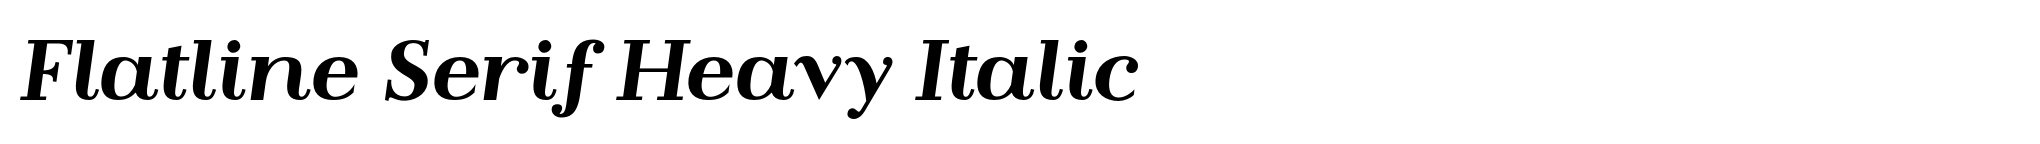 Flatline Serif Heavy Italic image